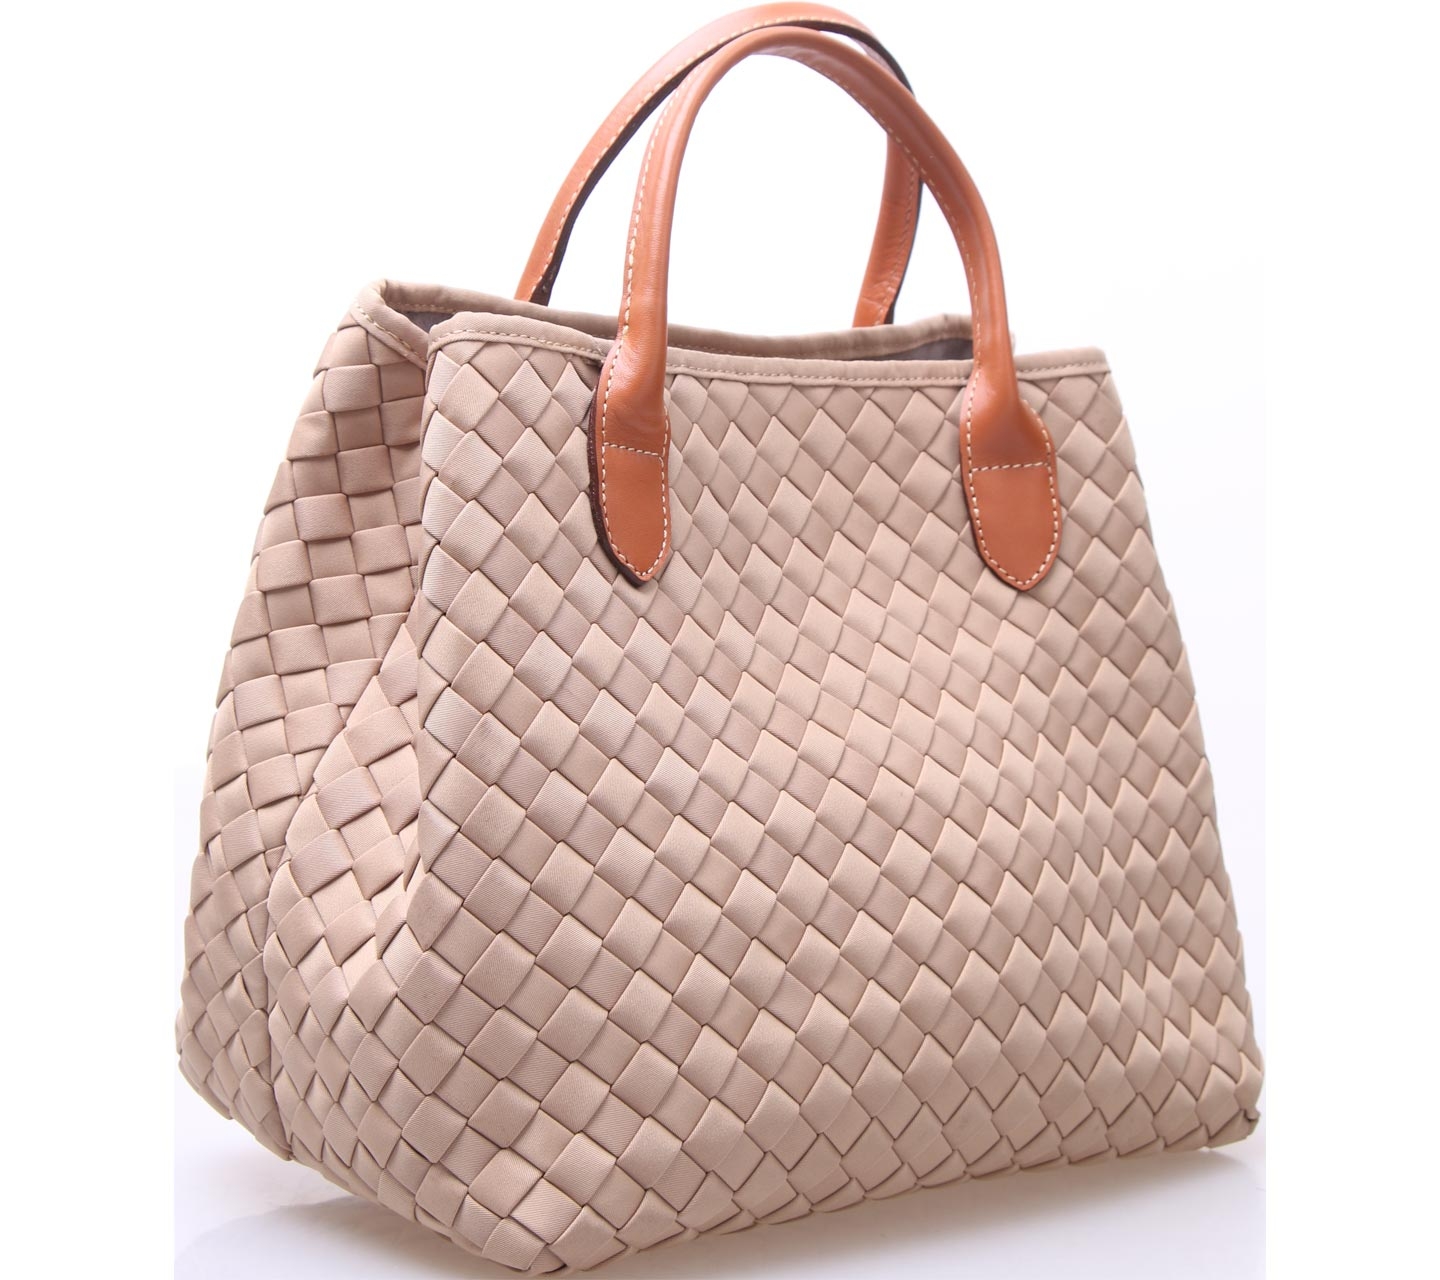 Webe Light Brown Handbag